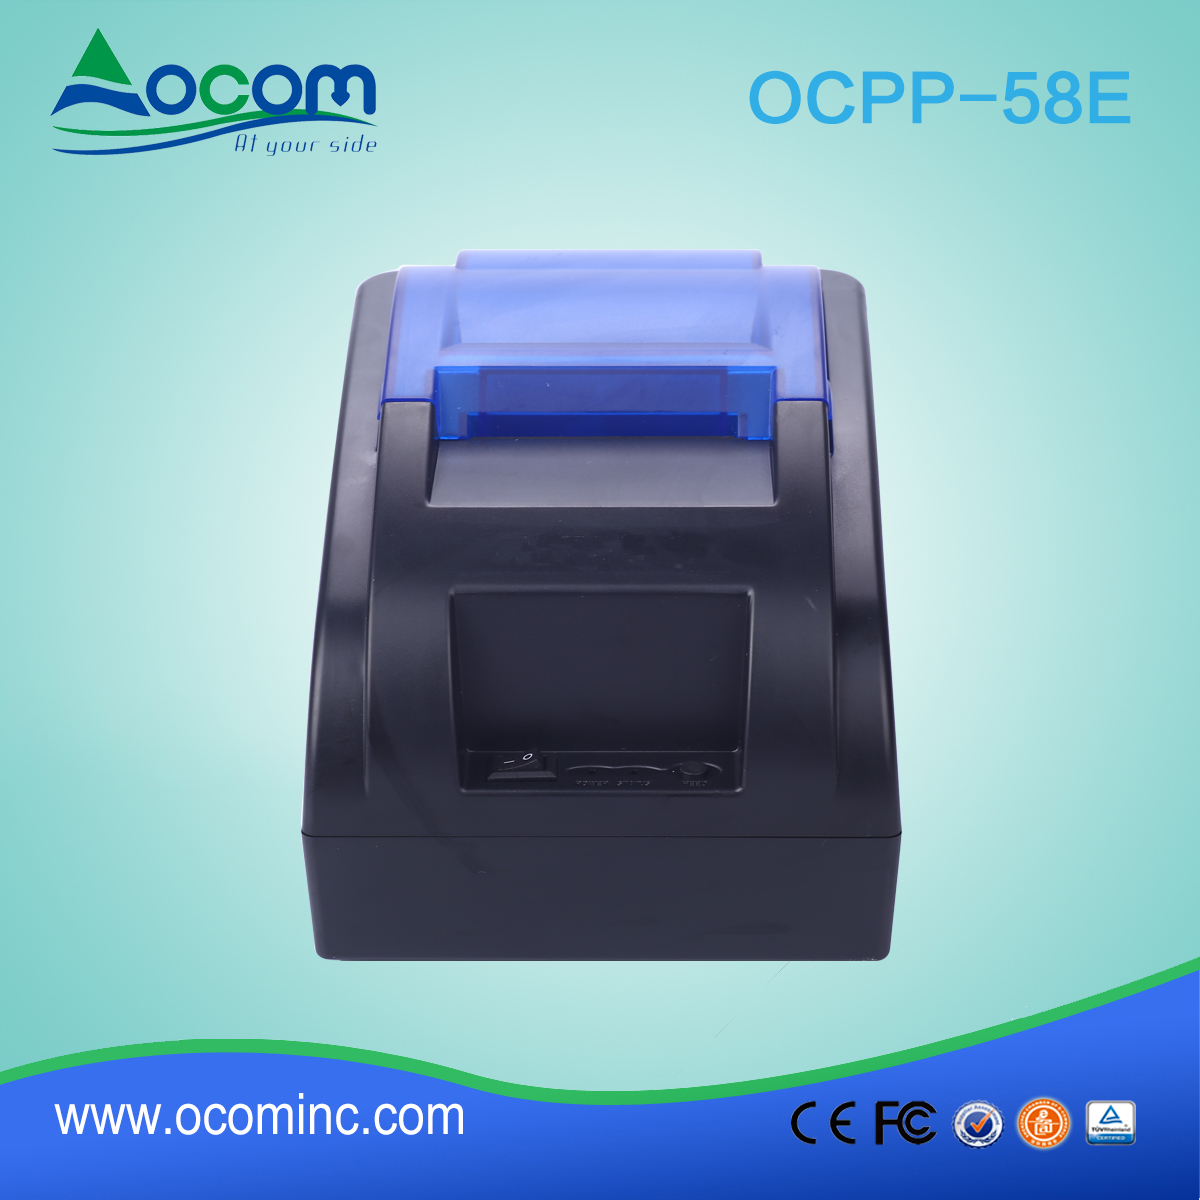 Impresora térmica de recibos OCPP-58E de 58 mm con adaptador de corriente incorporado